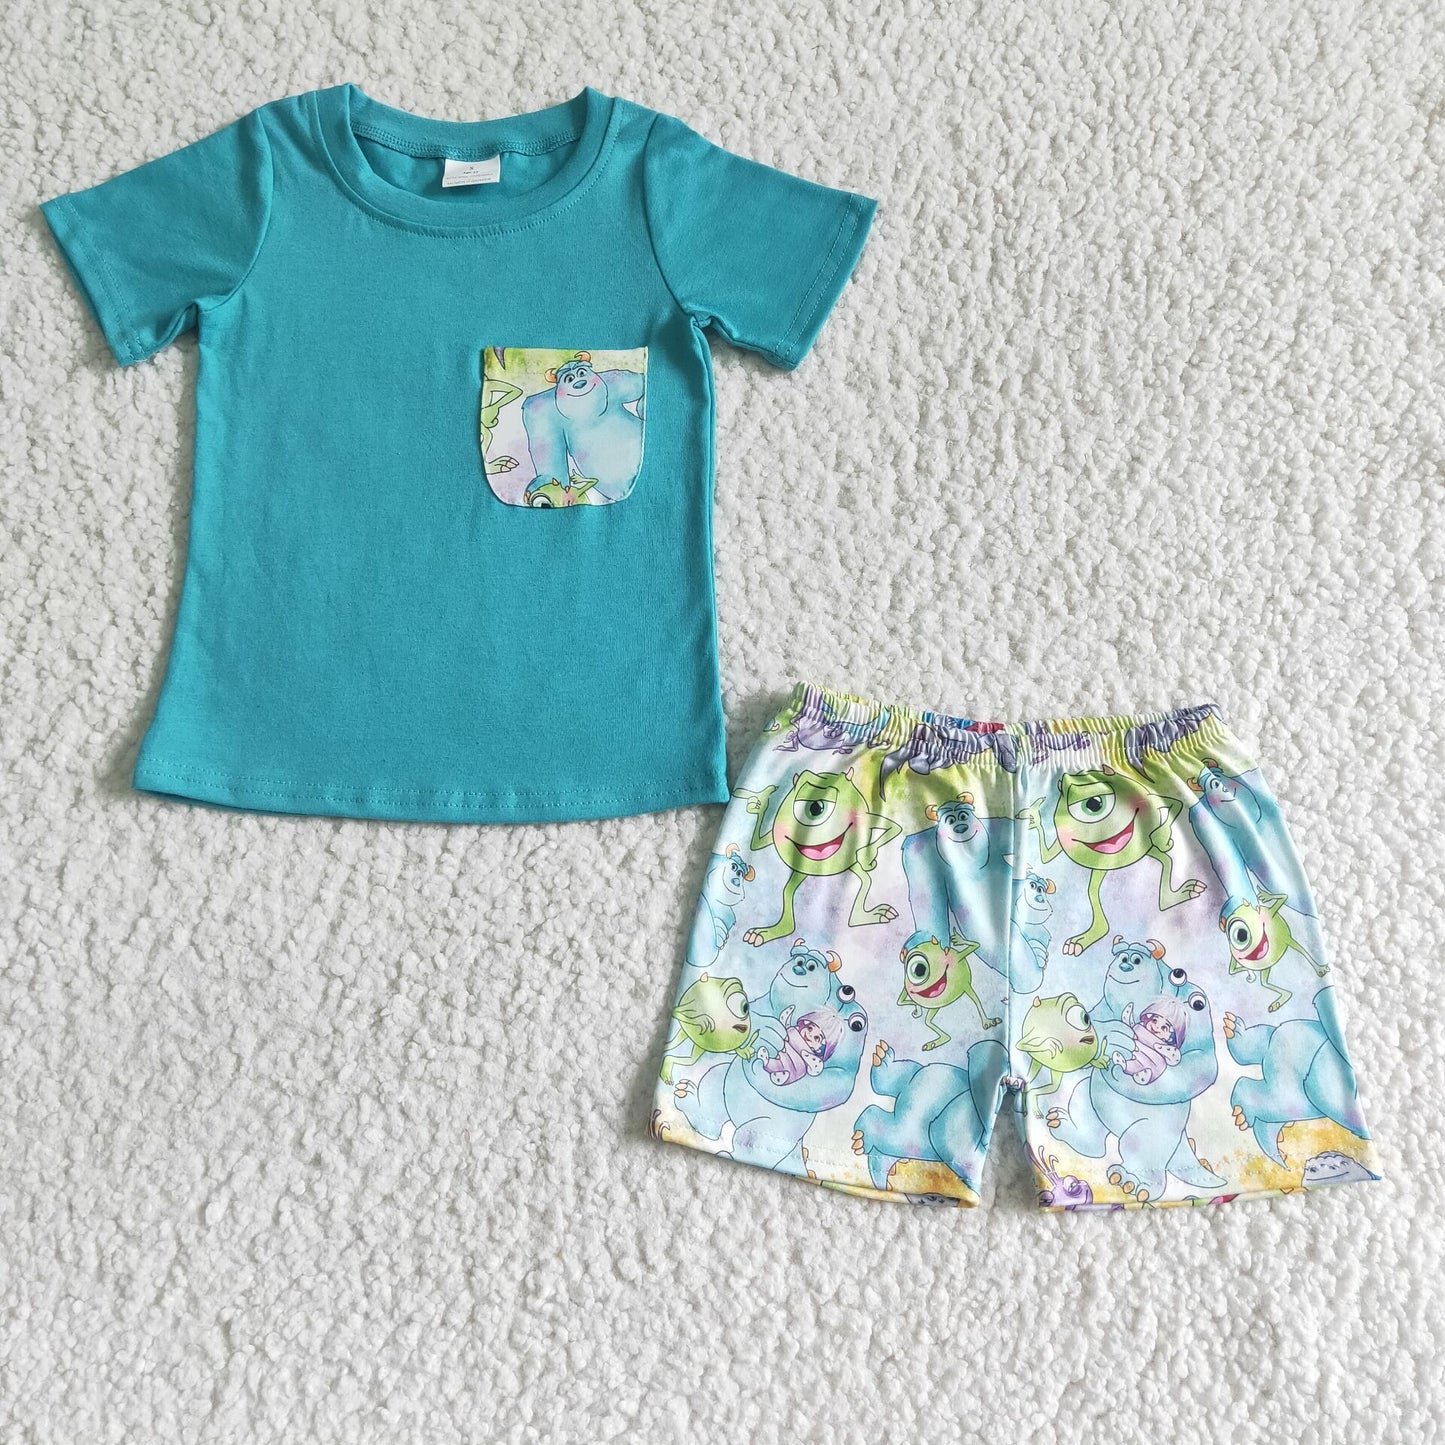 boy’s cartoon outfit shorts set clothing